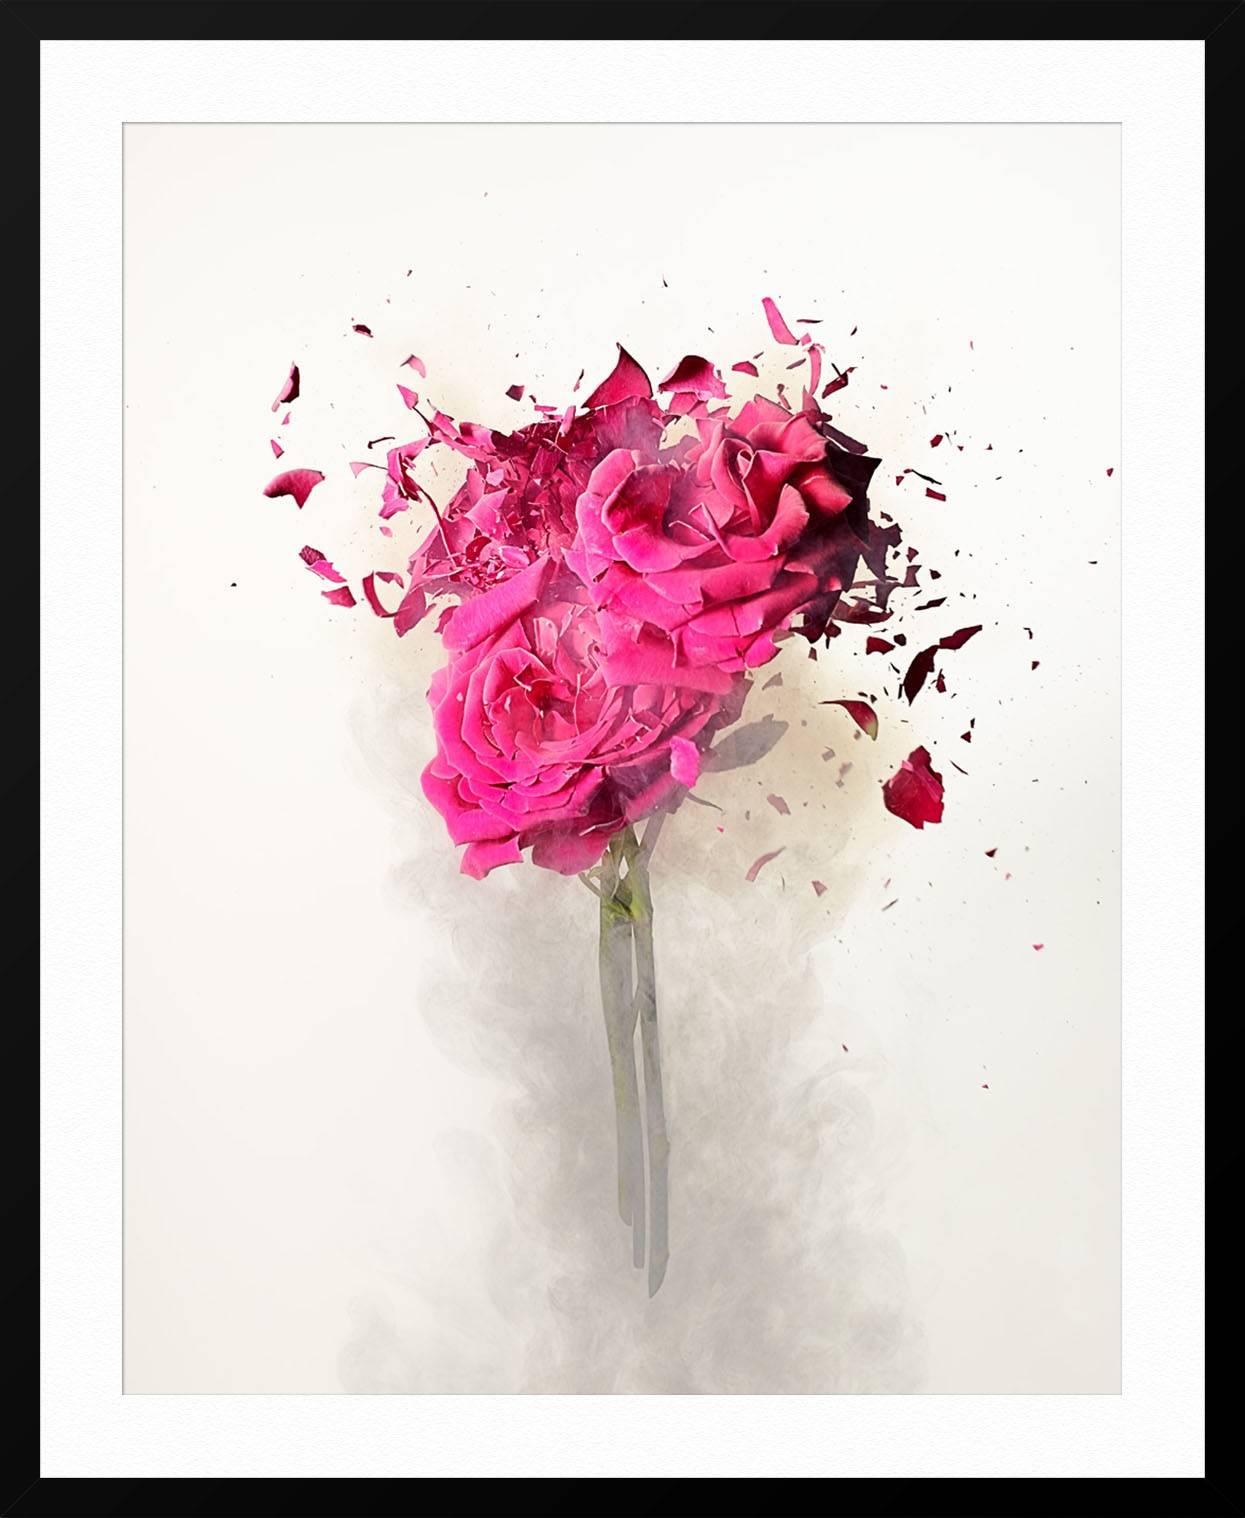 Rose Explosion 3 - White Still-Life Photograph by Dan Saelinger